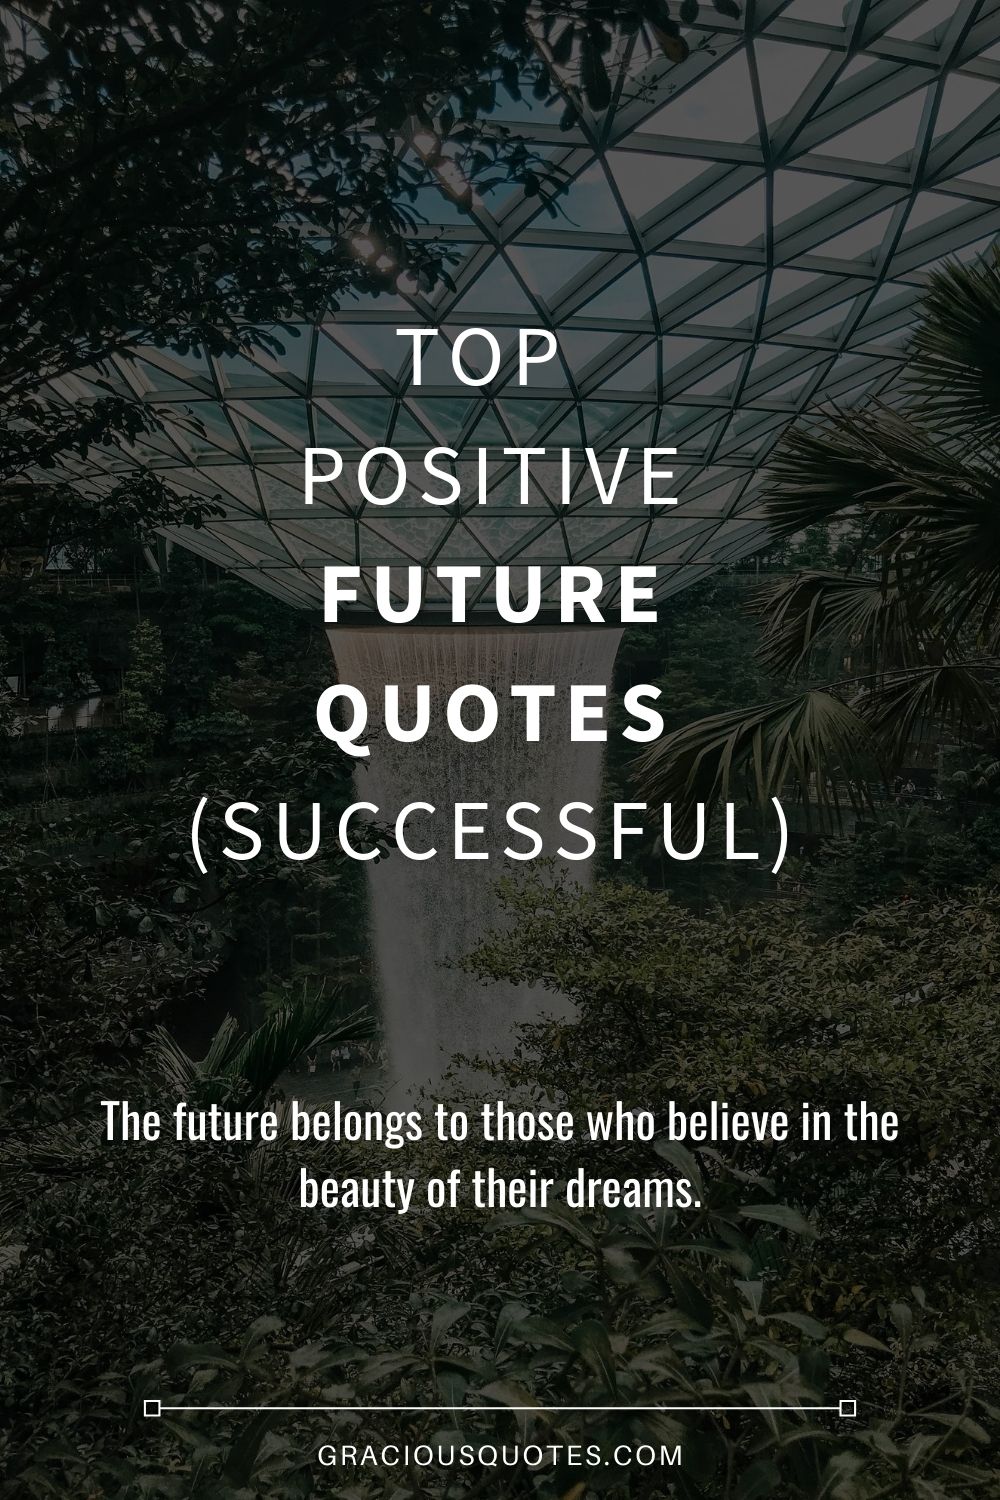 Top Positive Future Quotes (SUCCESSFUL) - Gracious Quotes